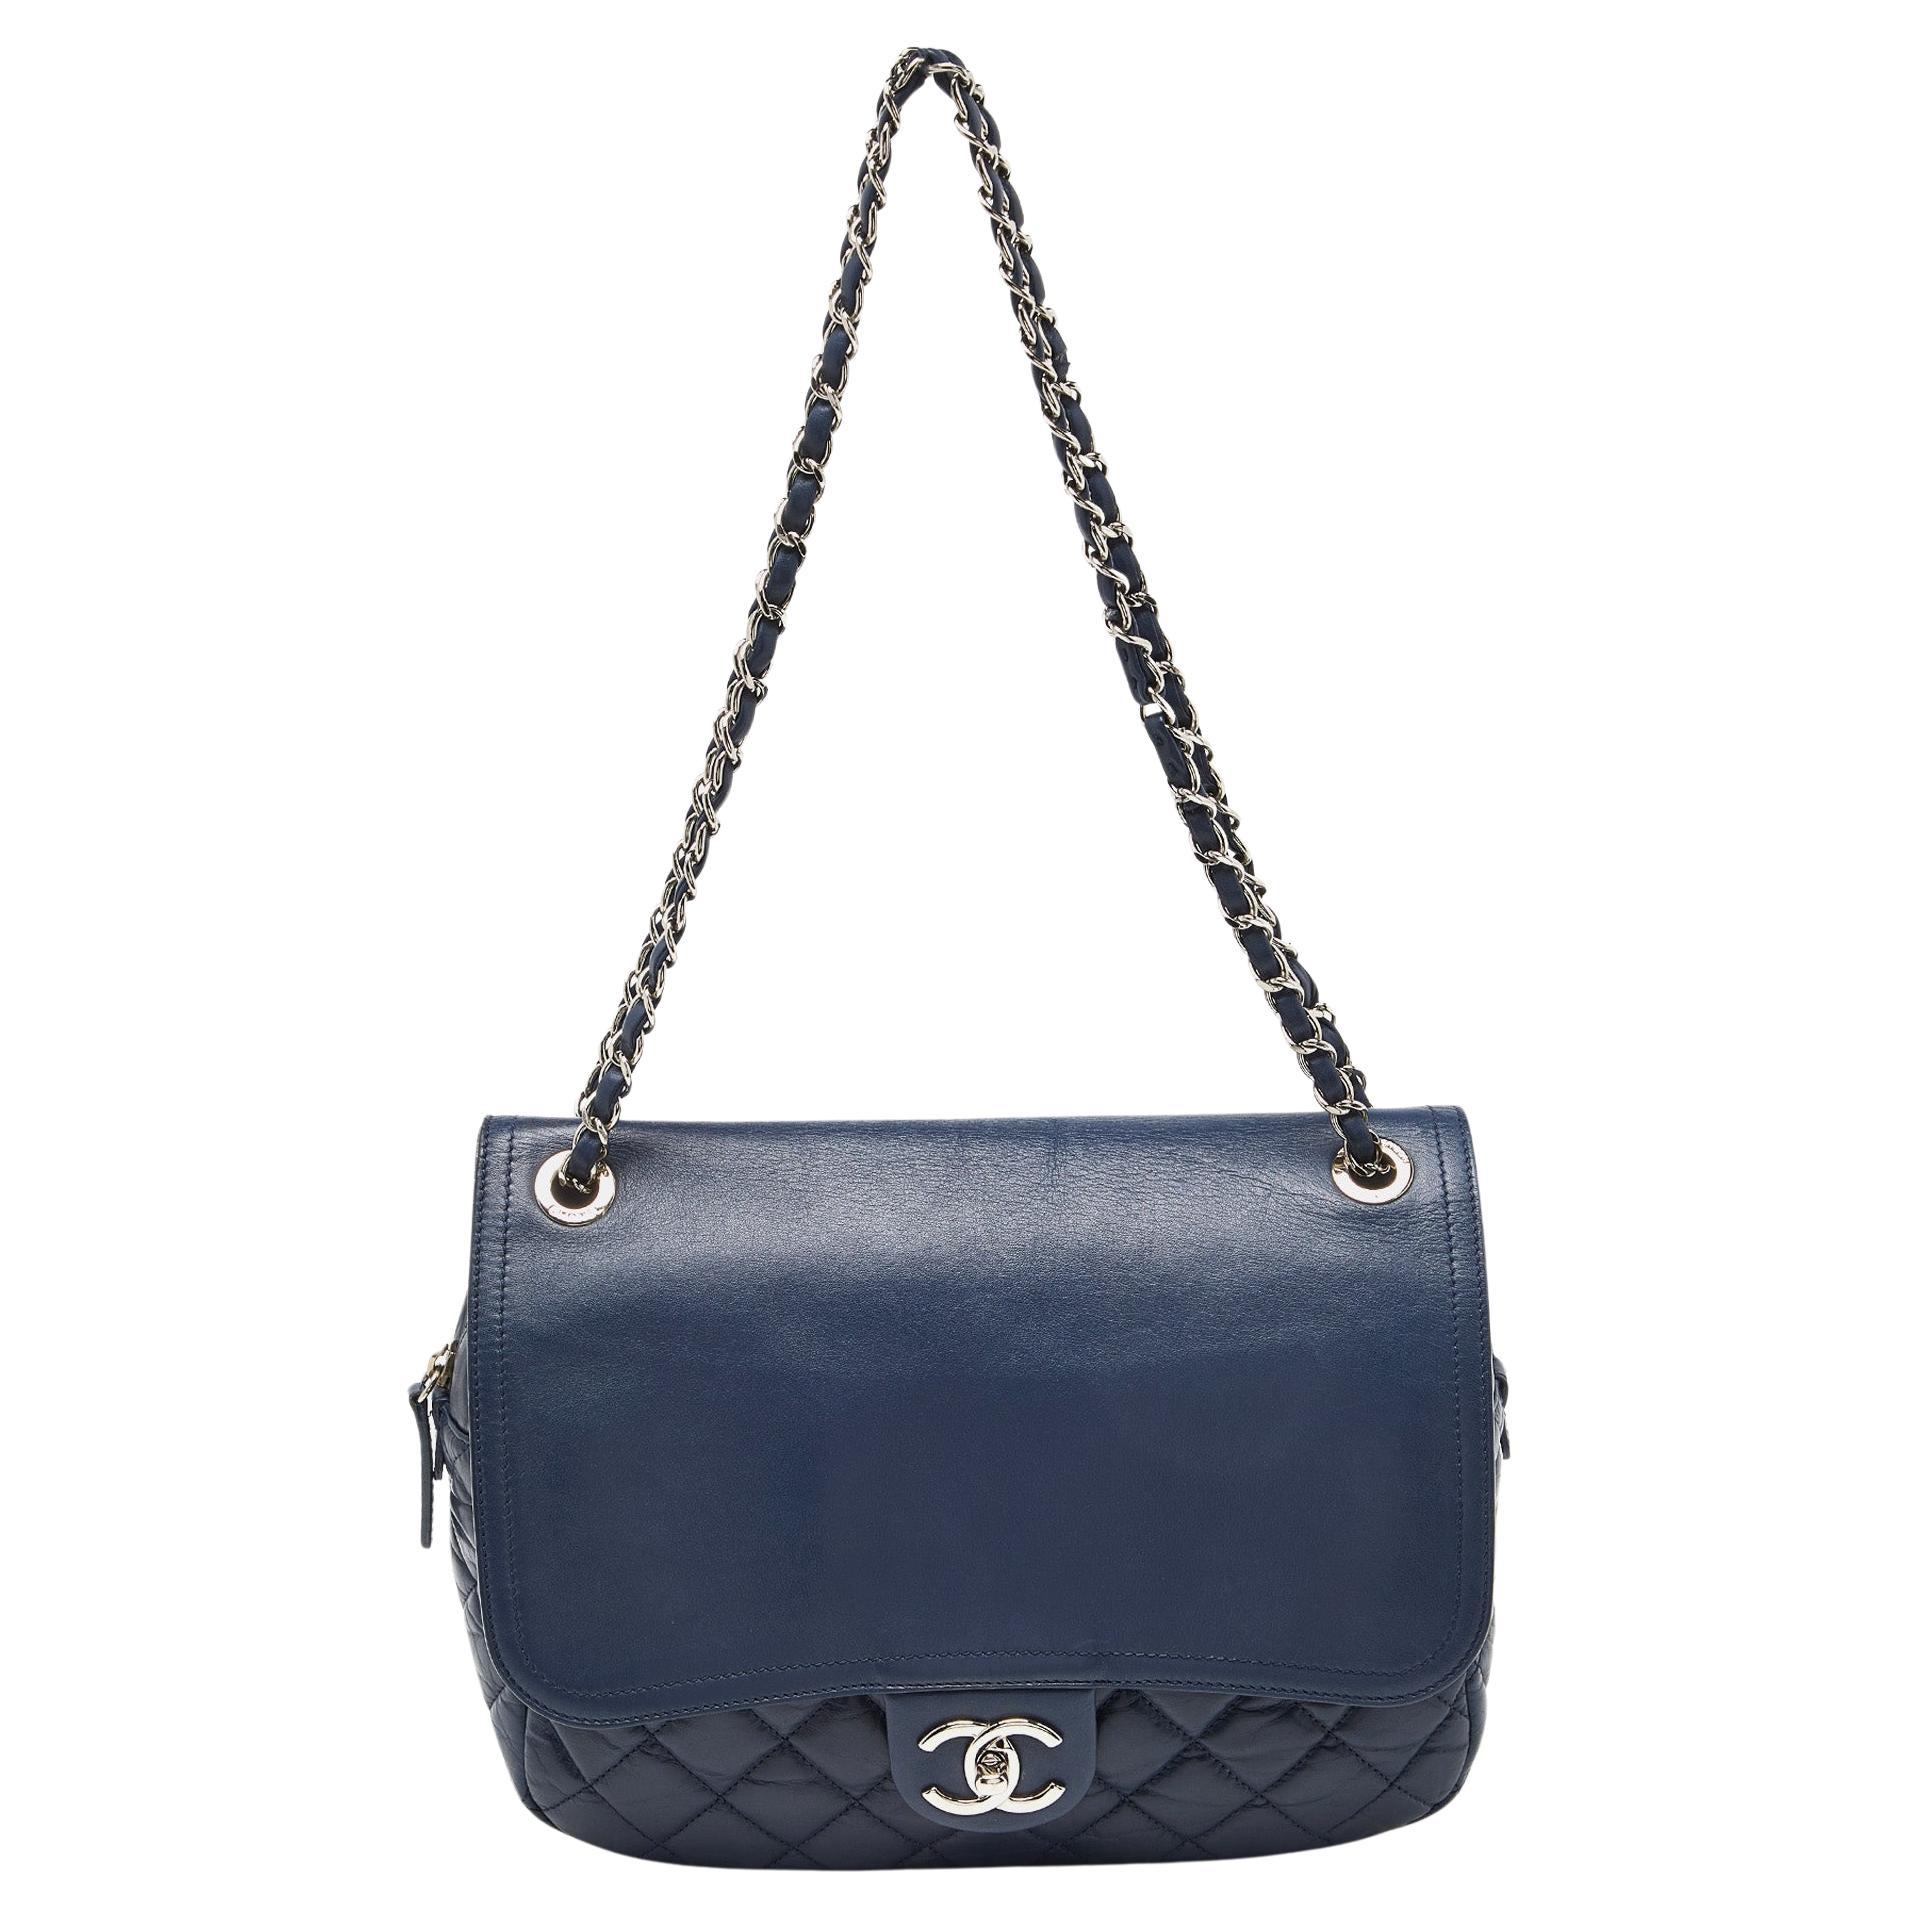 Chanel Blue Quilted Aged Leather Flap Shoulder Bag For Sale